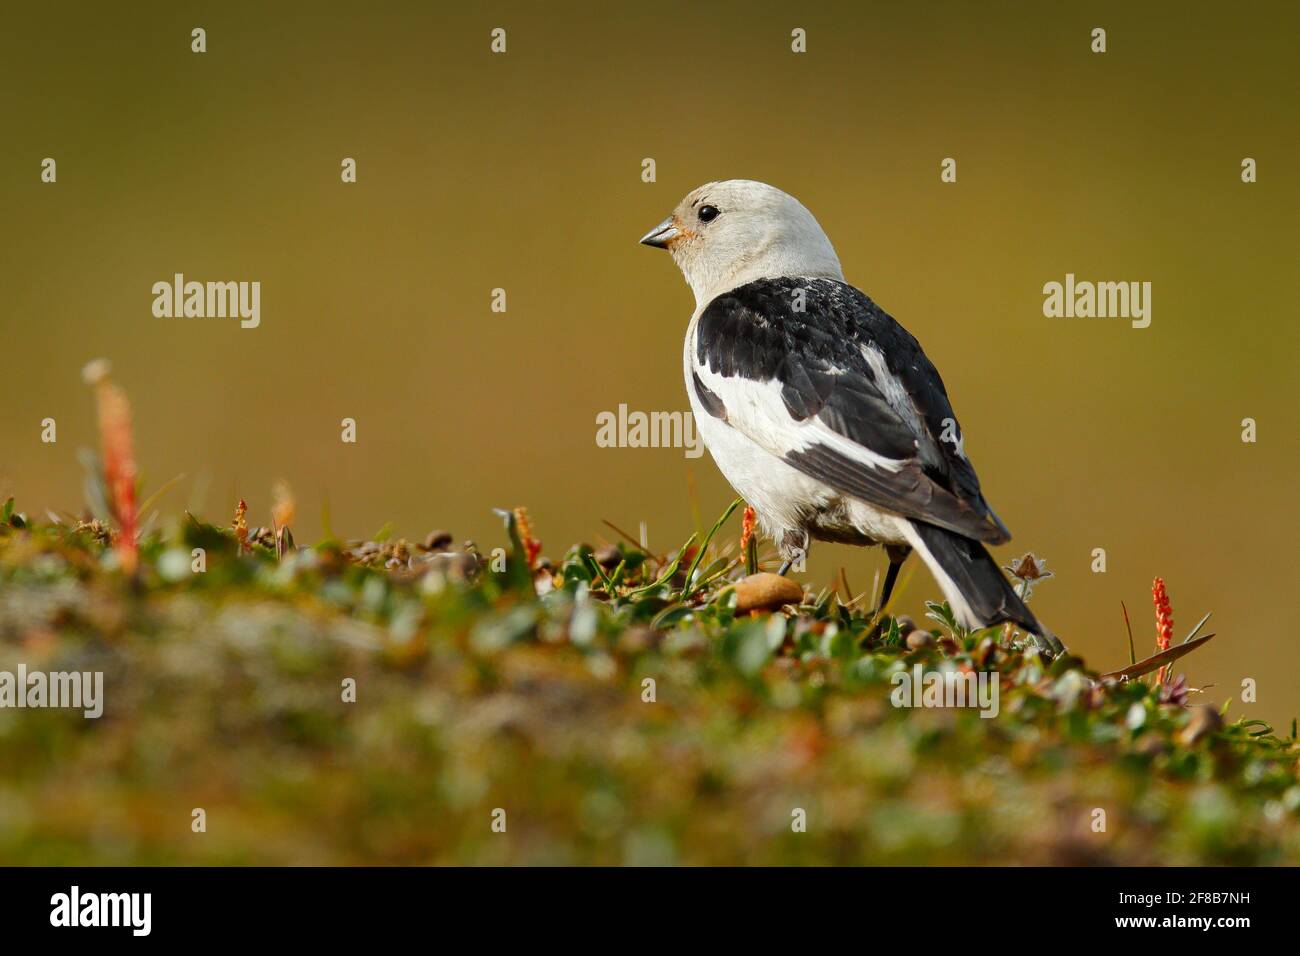 Schneehammer, Plectrophenax nivalis, Sperlingsvögel aus der Familie Calcariidae, Arktisspezialist aus Svalbard, Norwegen. Vogel im Gras, Natur Habita Stockfoto